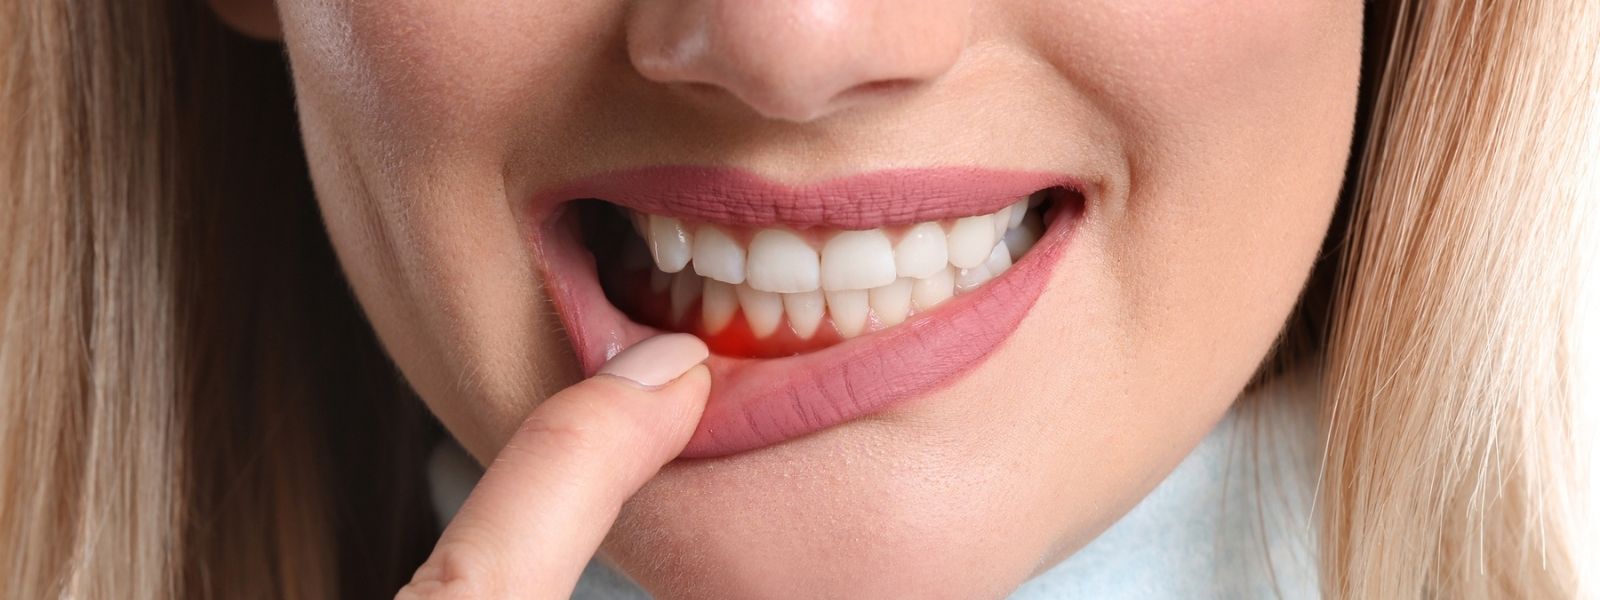 Girl with nice teeth showing gum.